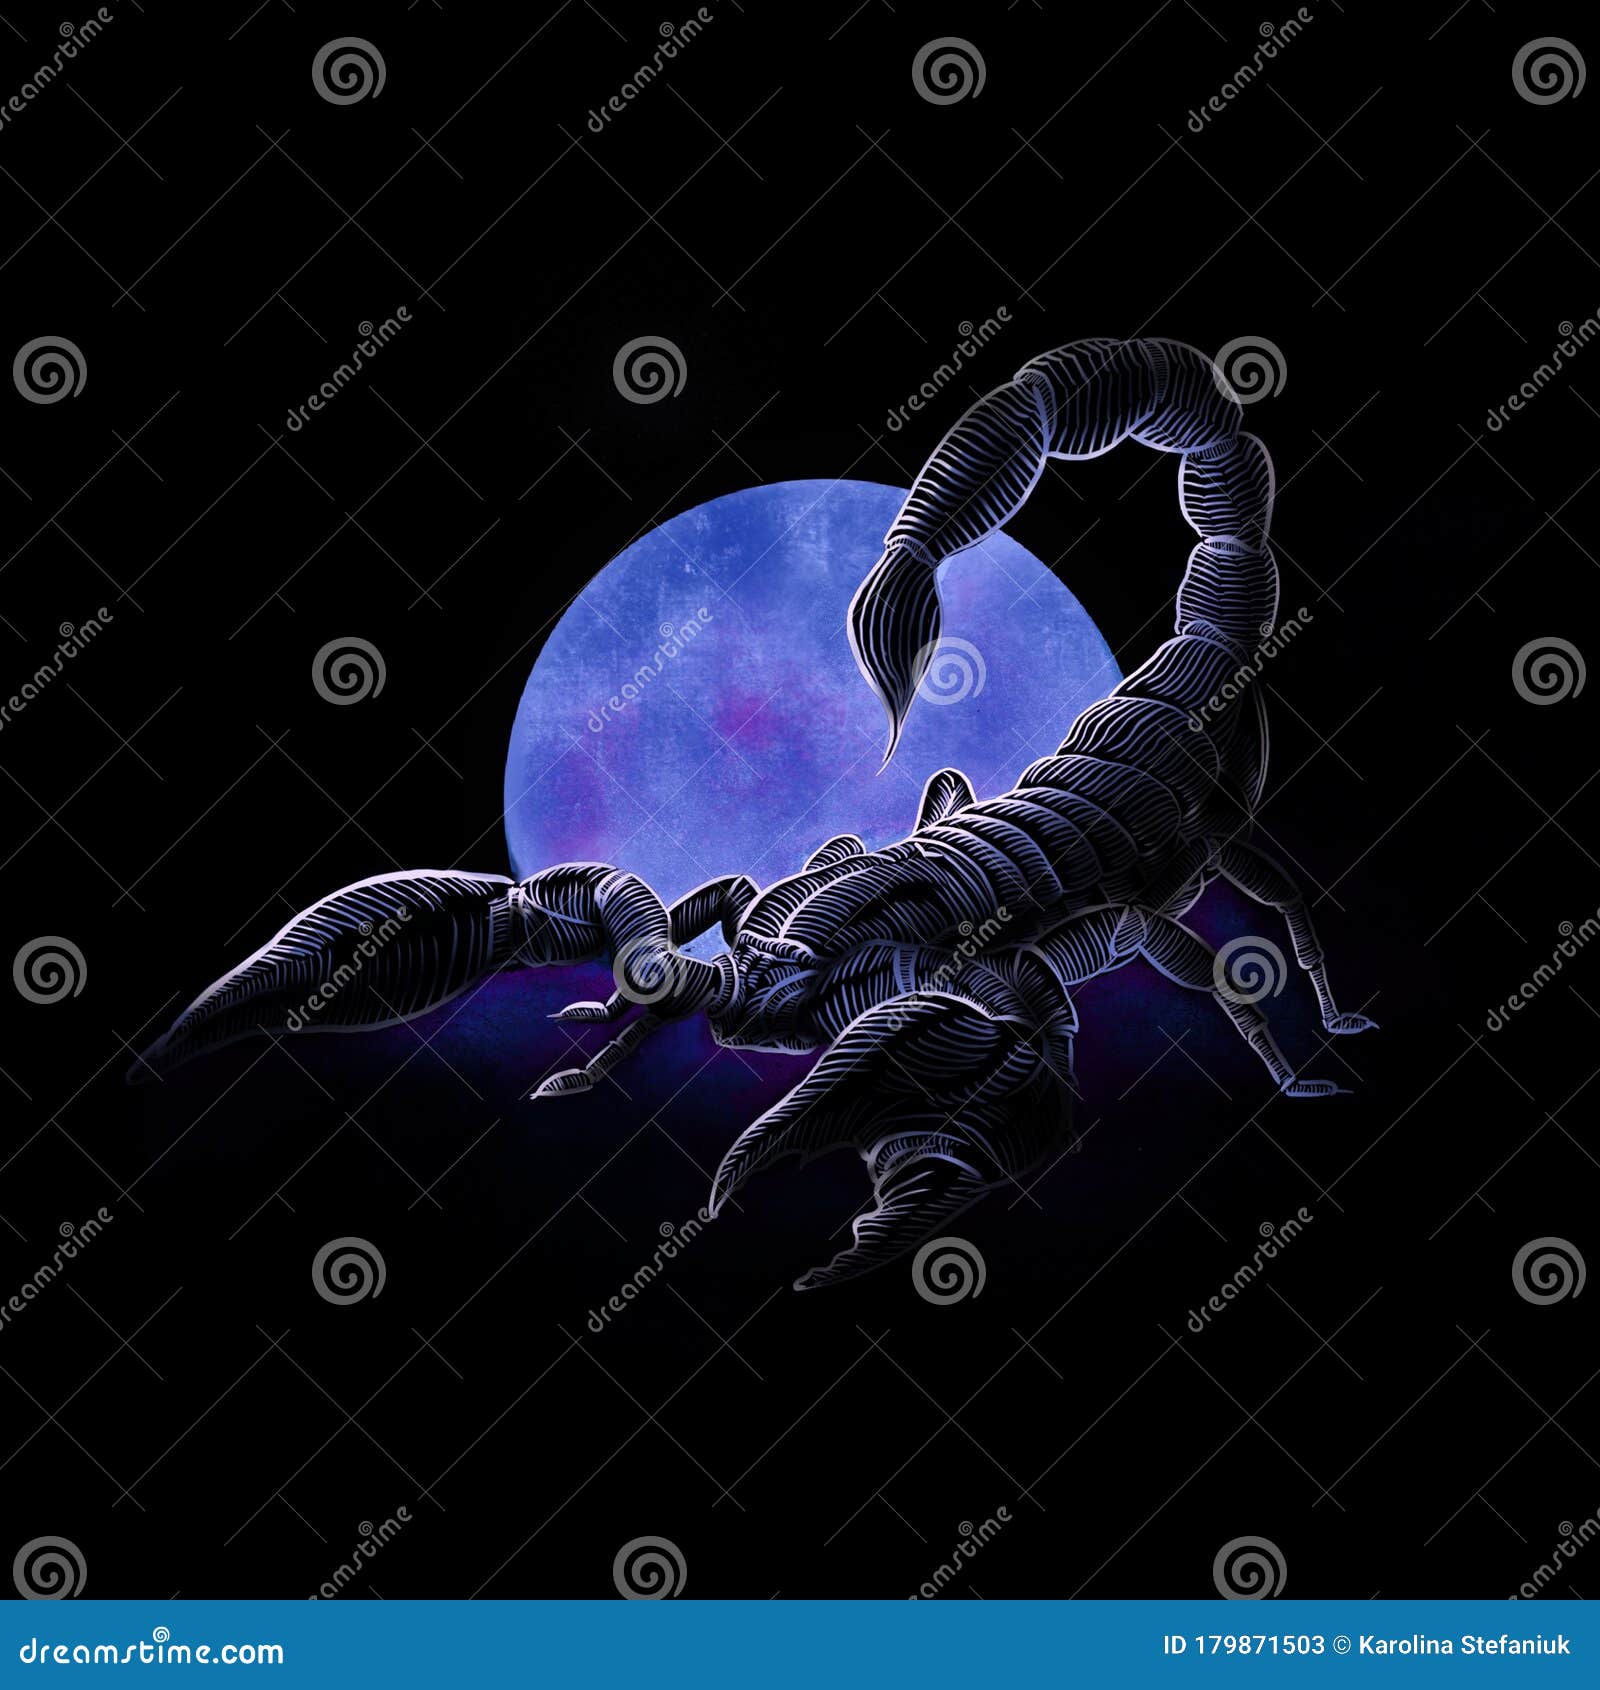 40+] Scorpio Zodiac Wallpaper - WallpaperSafari